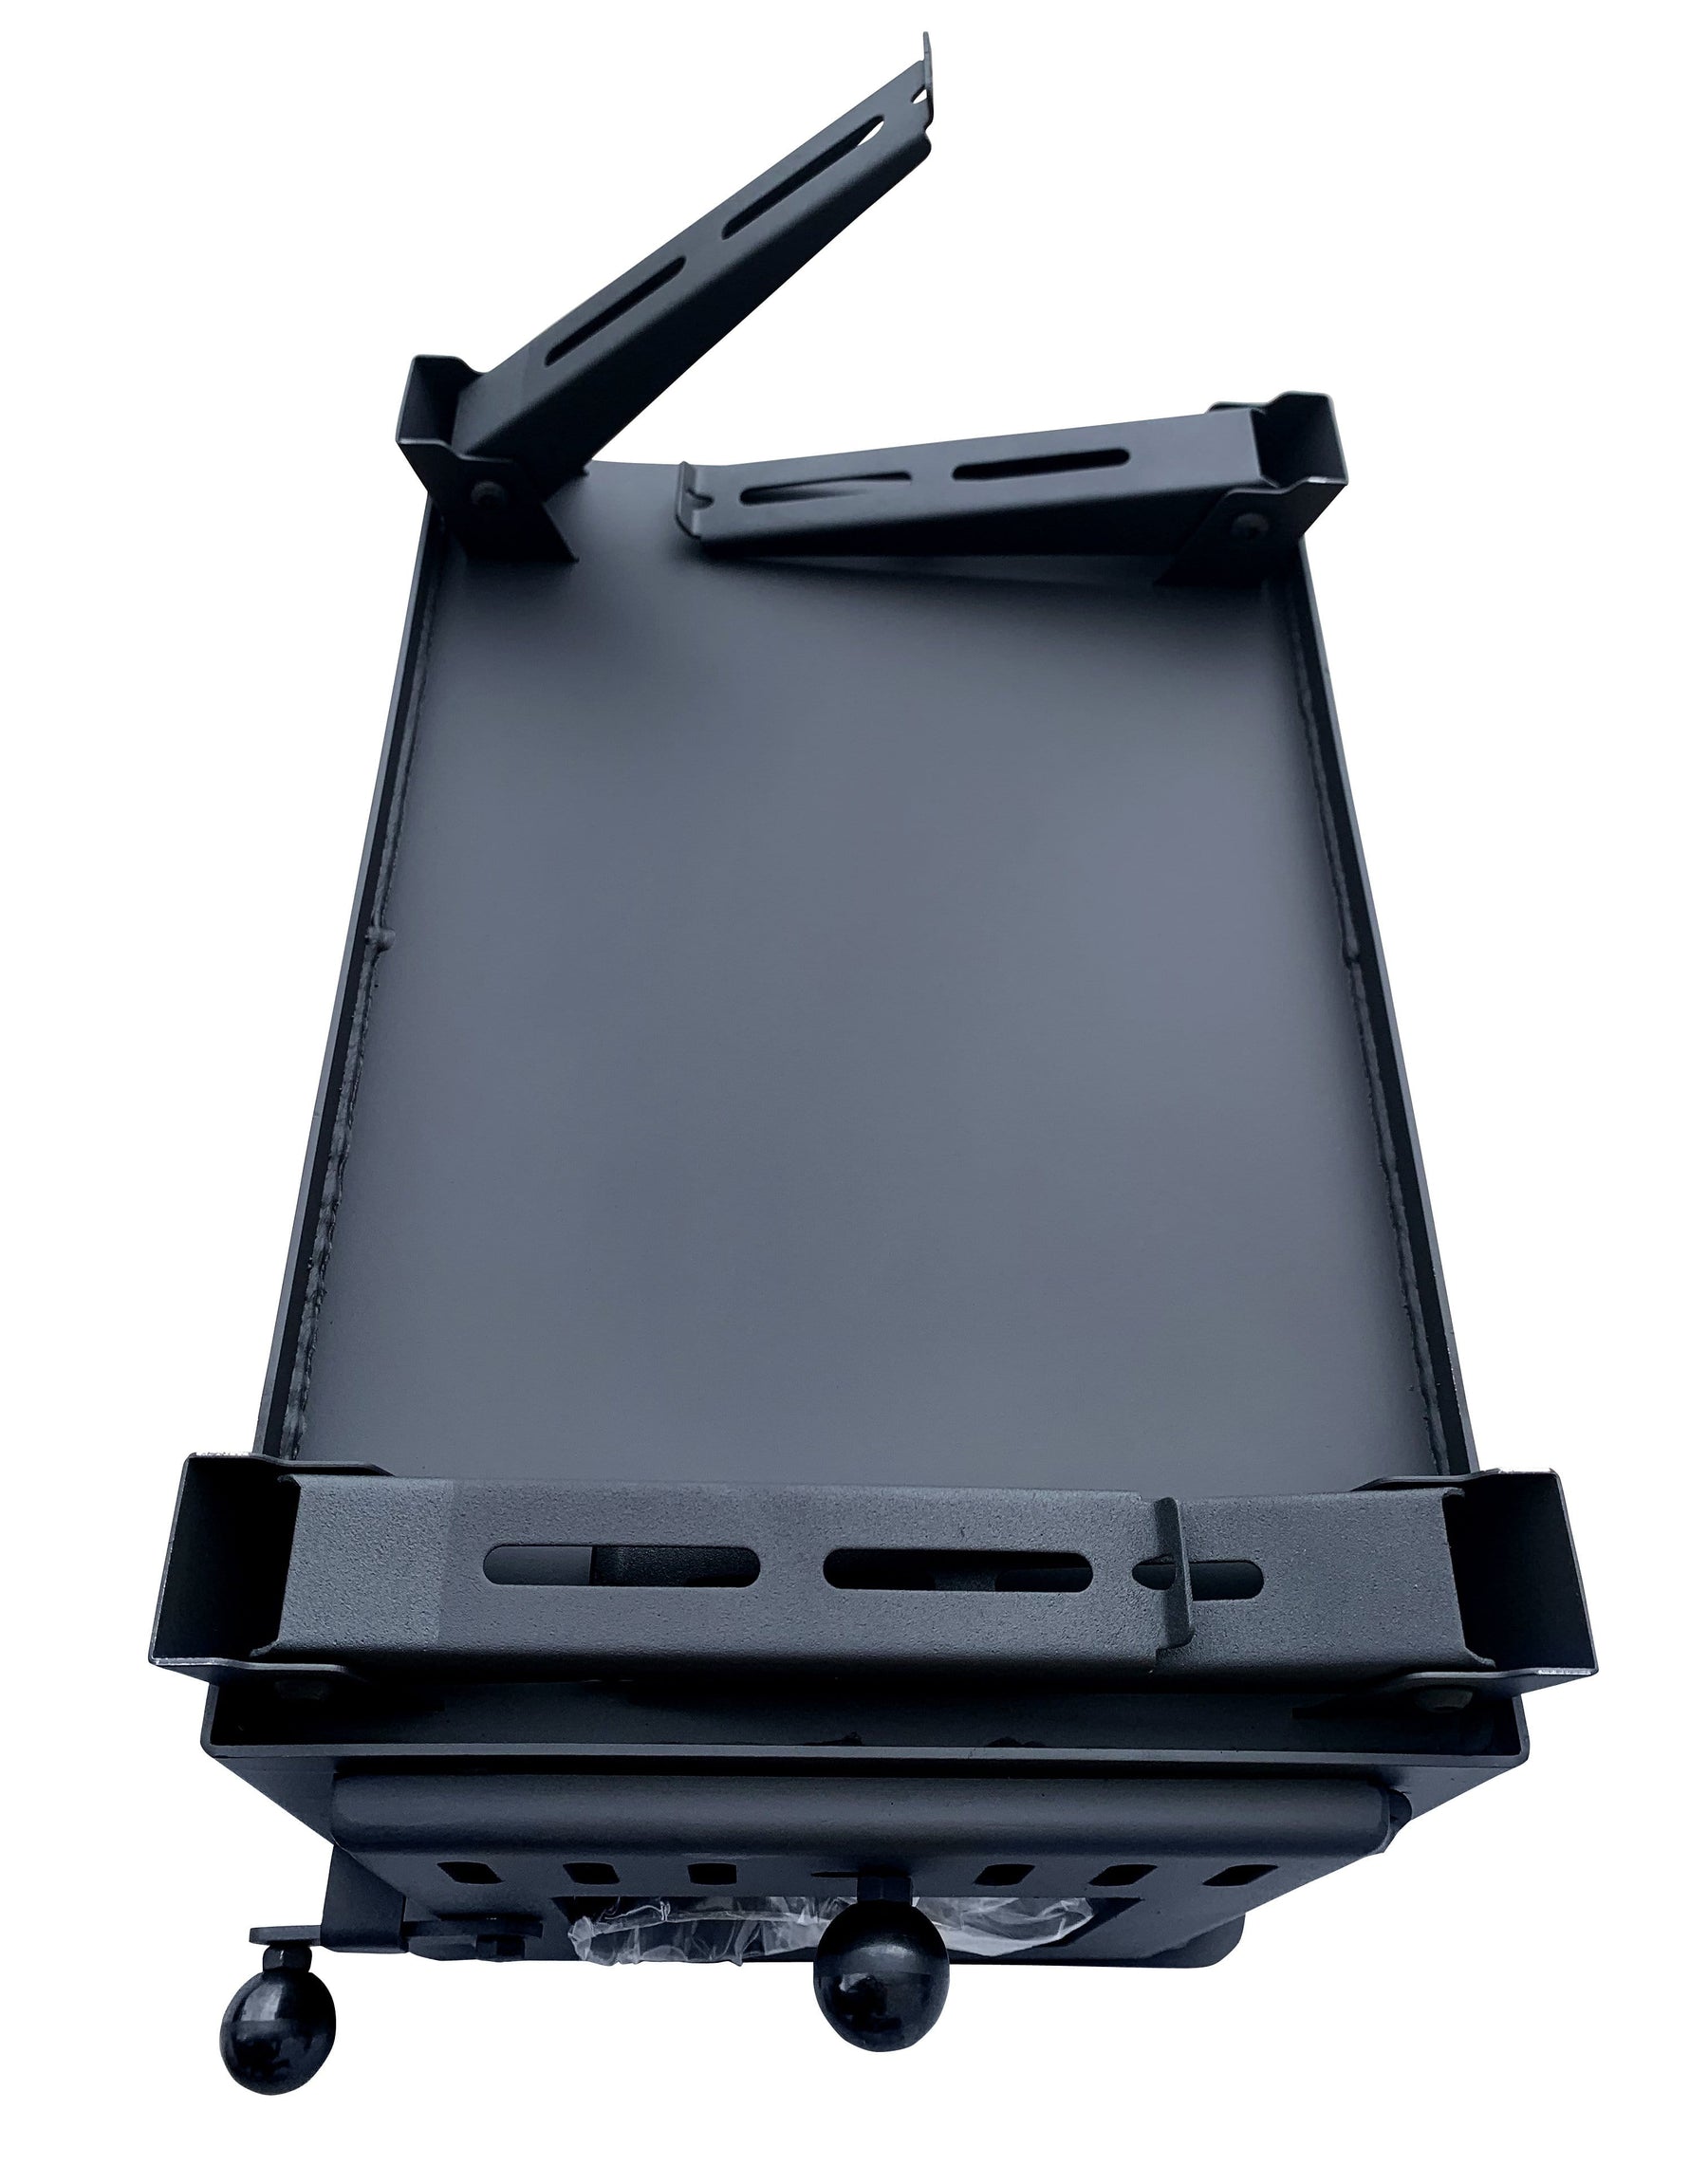 Outbacker® 'Firebox' Eco Burn -Secondary Burn Portable Tent Stove